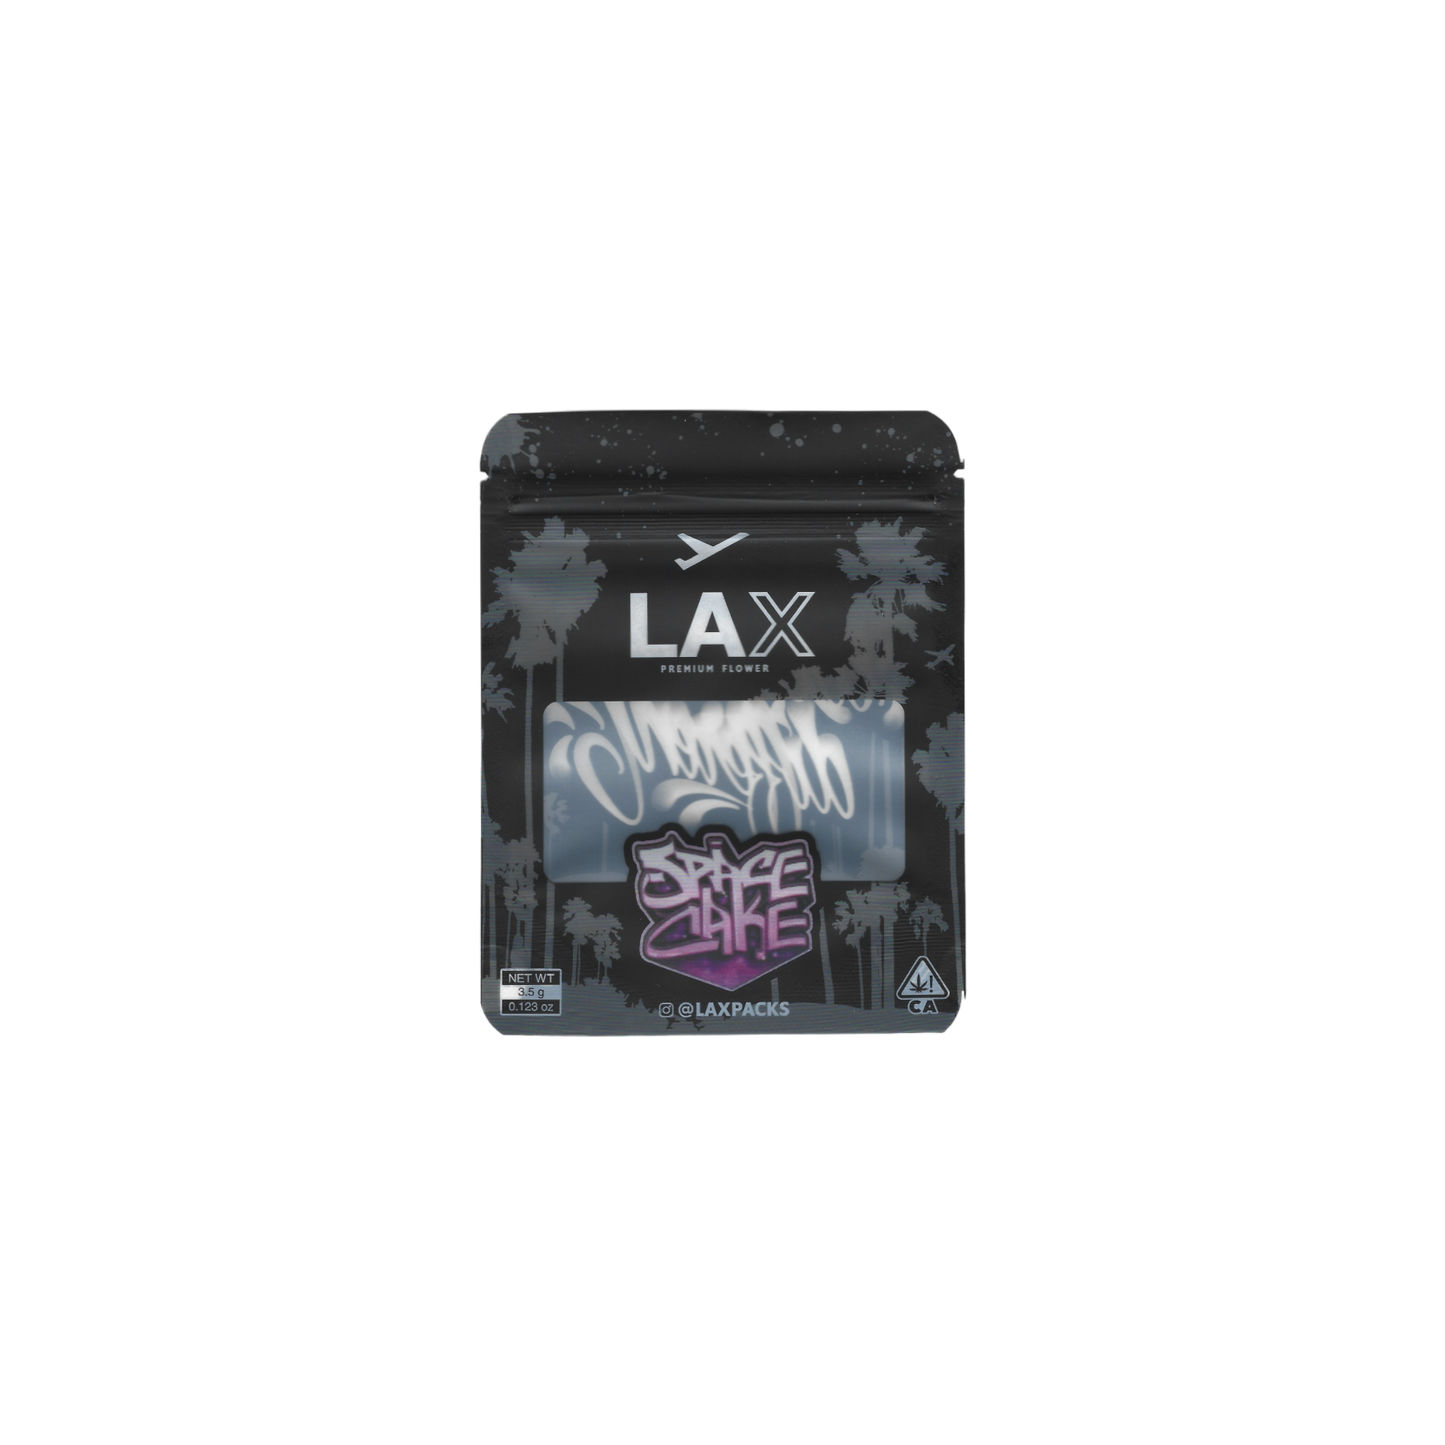 10x LAX Space cake Mylar Bag 3,5g - Leer